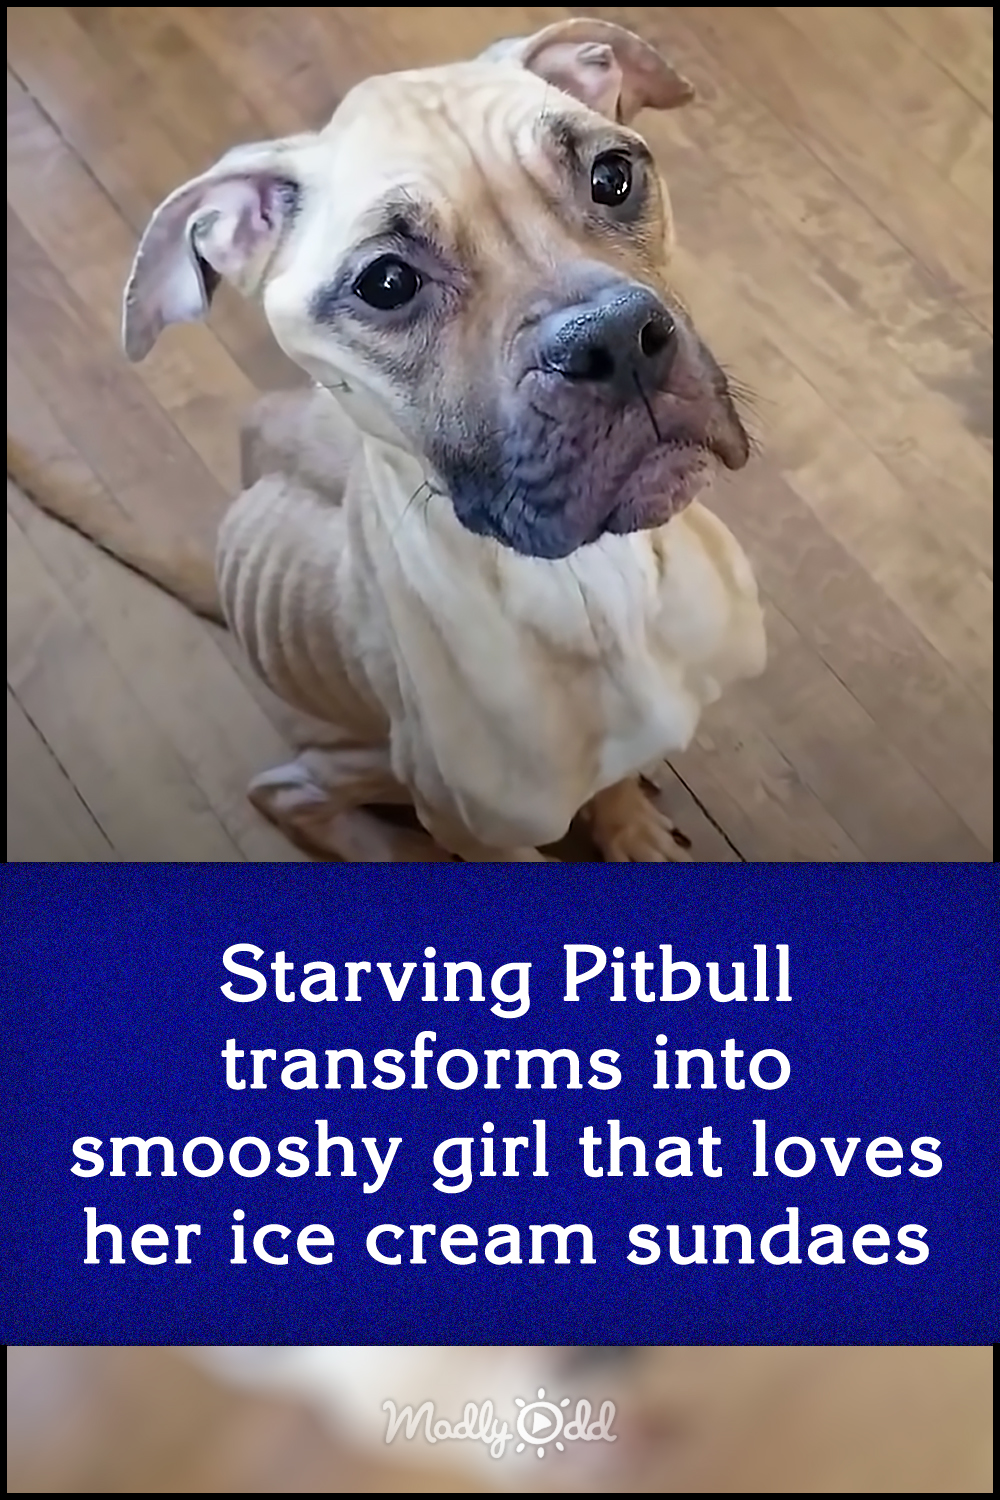 Starving Pitbull transforms into smooshy girl that loves her ice cream sundaes